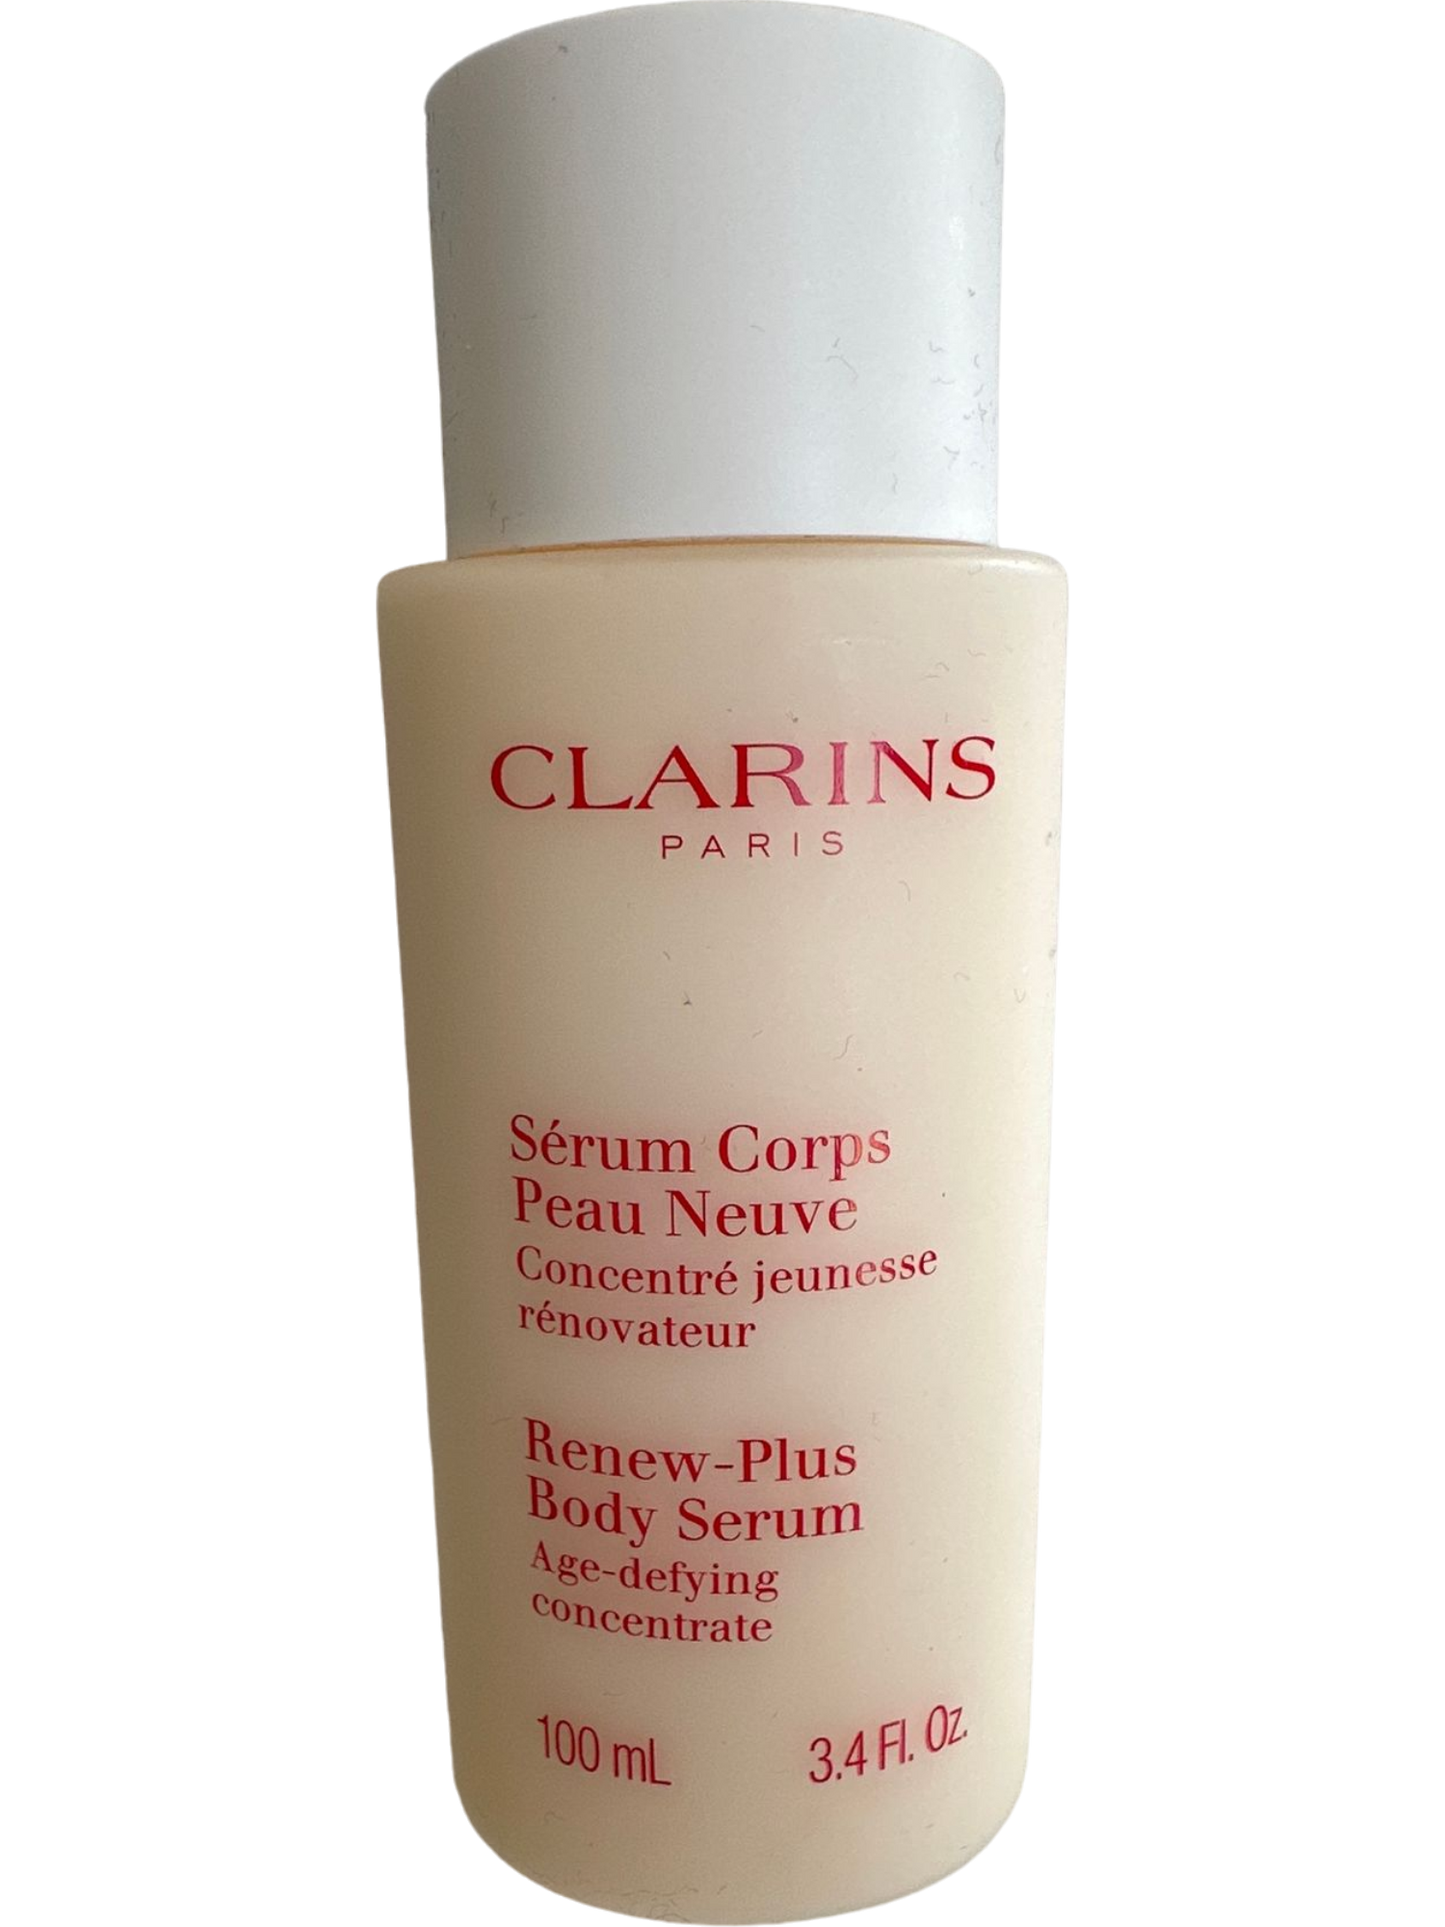 Clarins Paris Renew-Plus Body Serum Age-defying Concentrate 100 ml